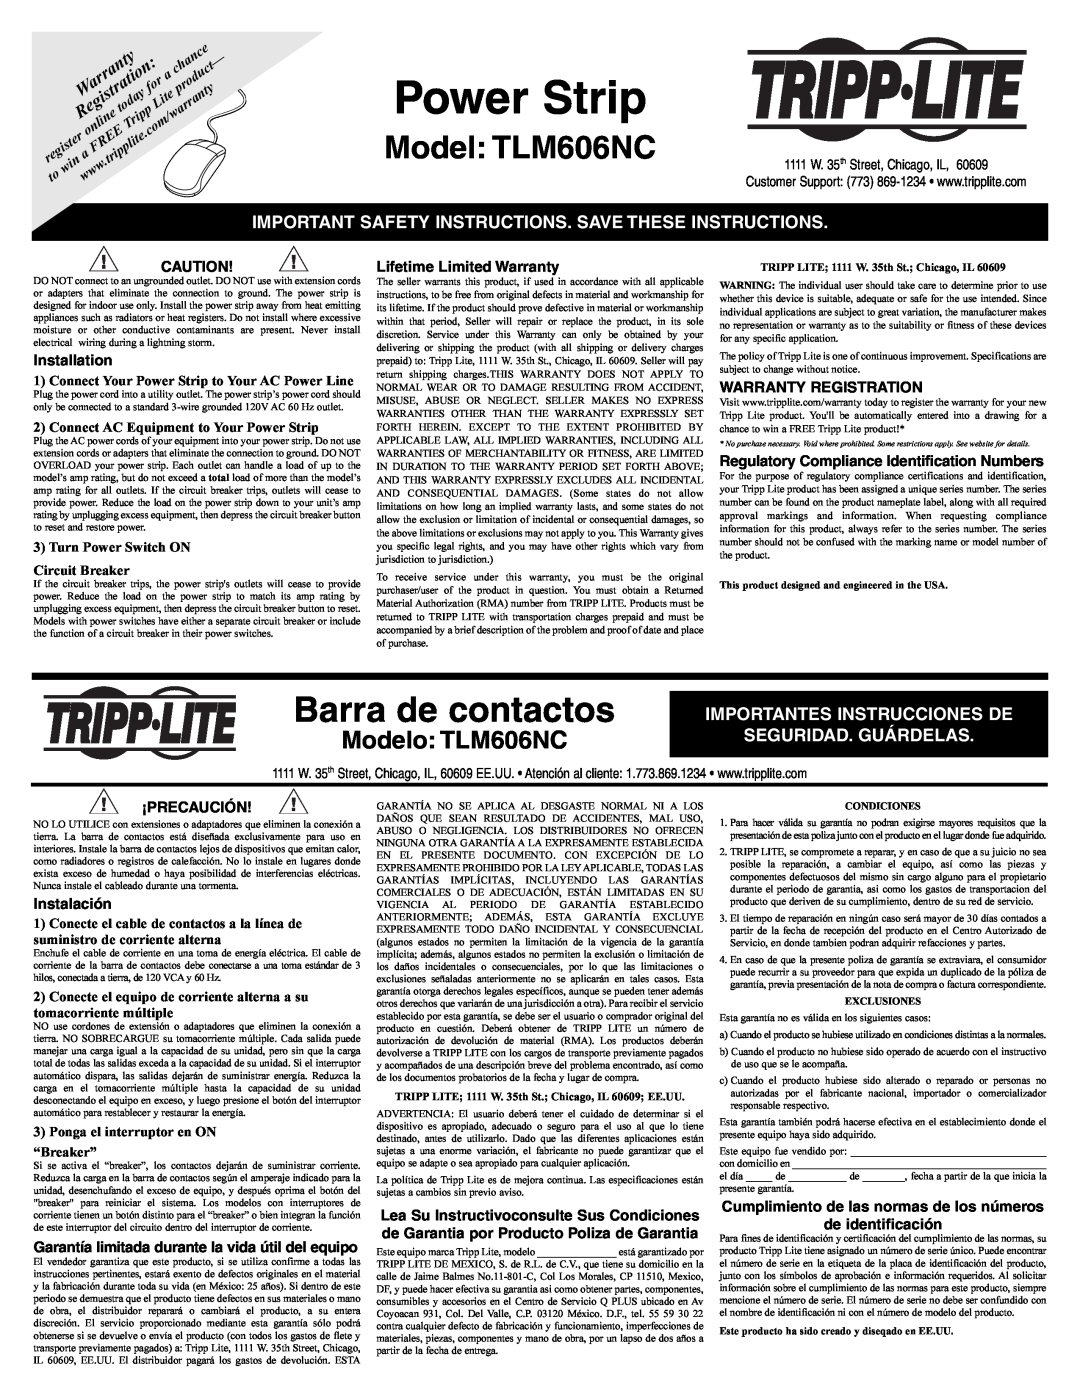 Tripp Lite important safety instructions Barra de contactos, Modelo TLM606NC, Warranty, Registration, Installation 